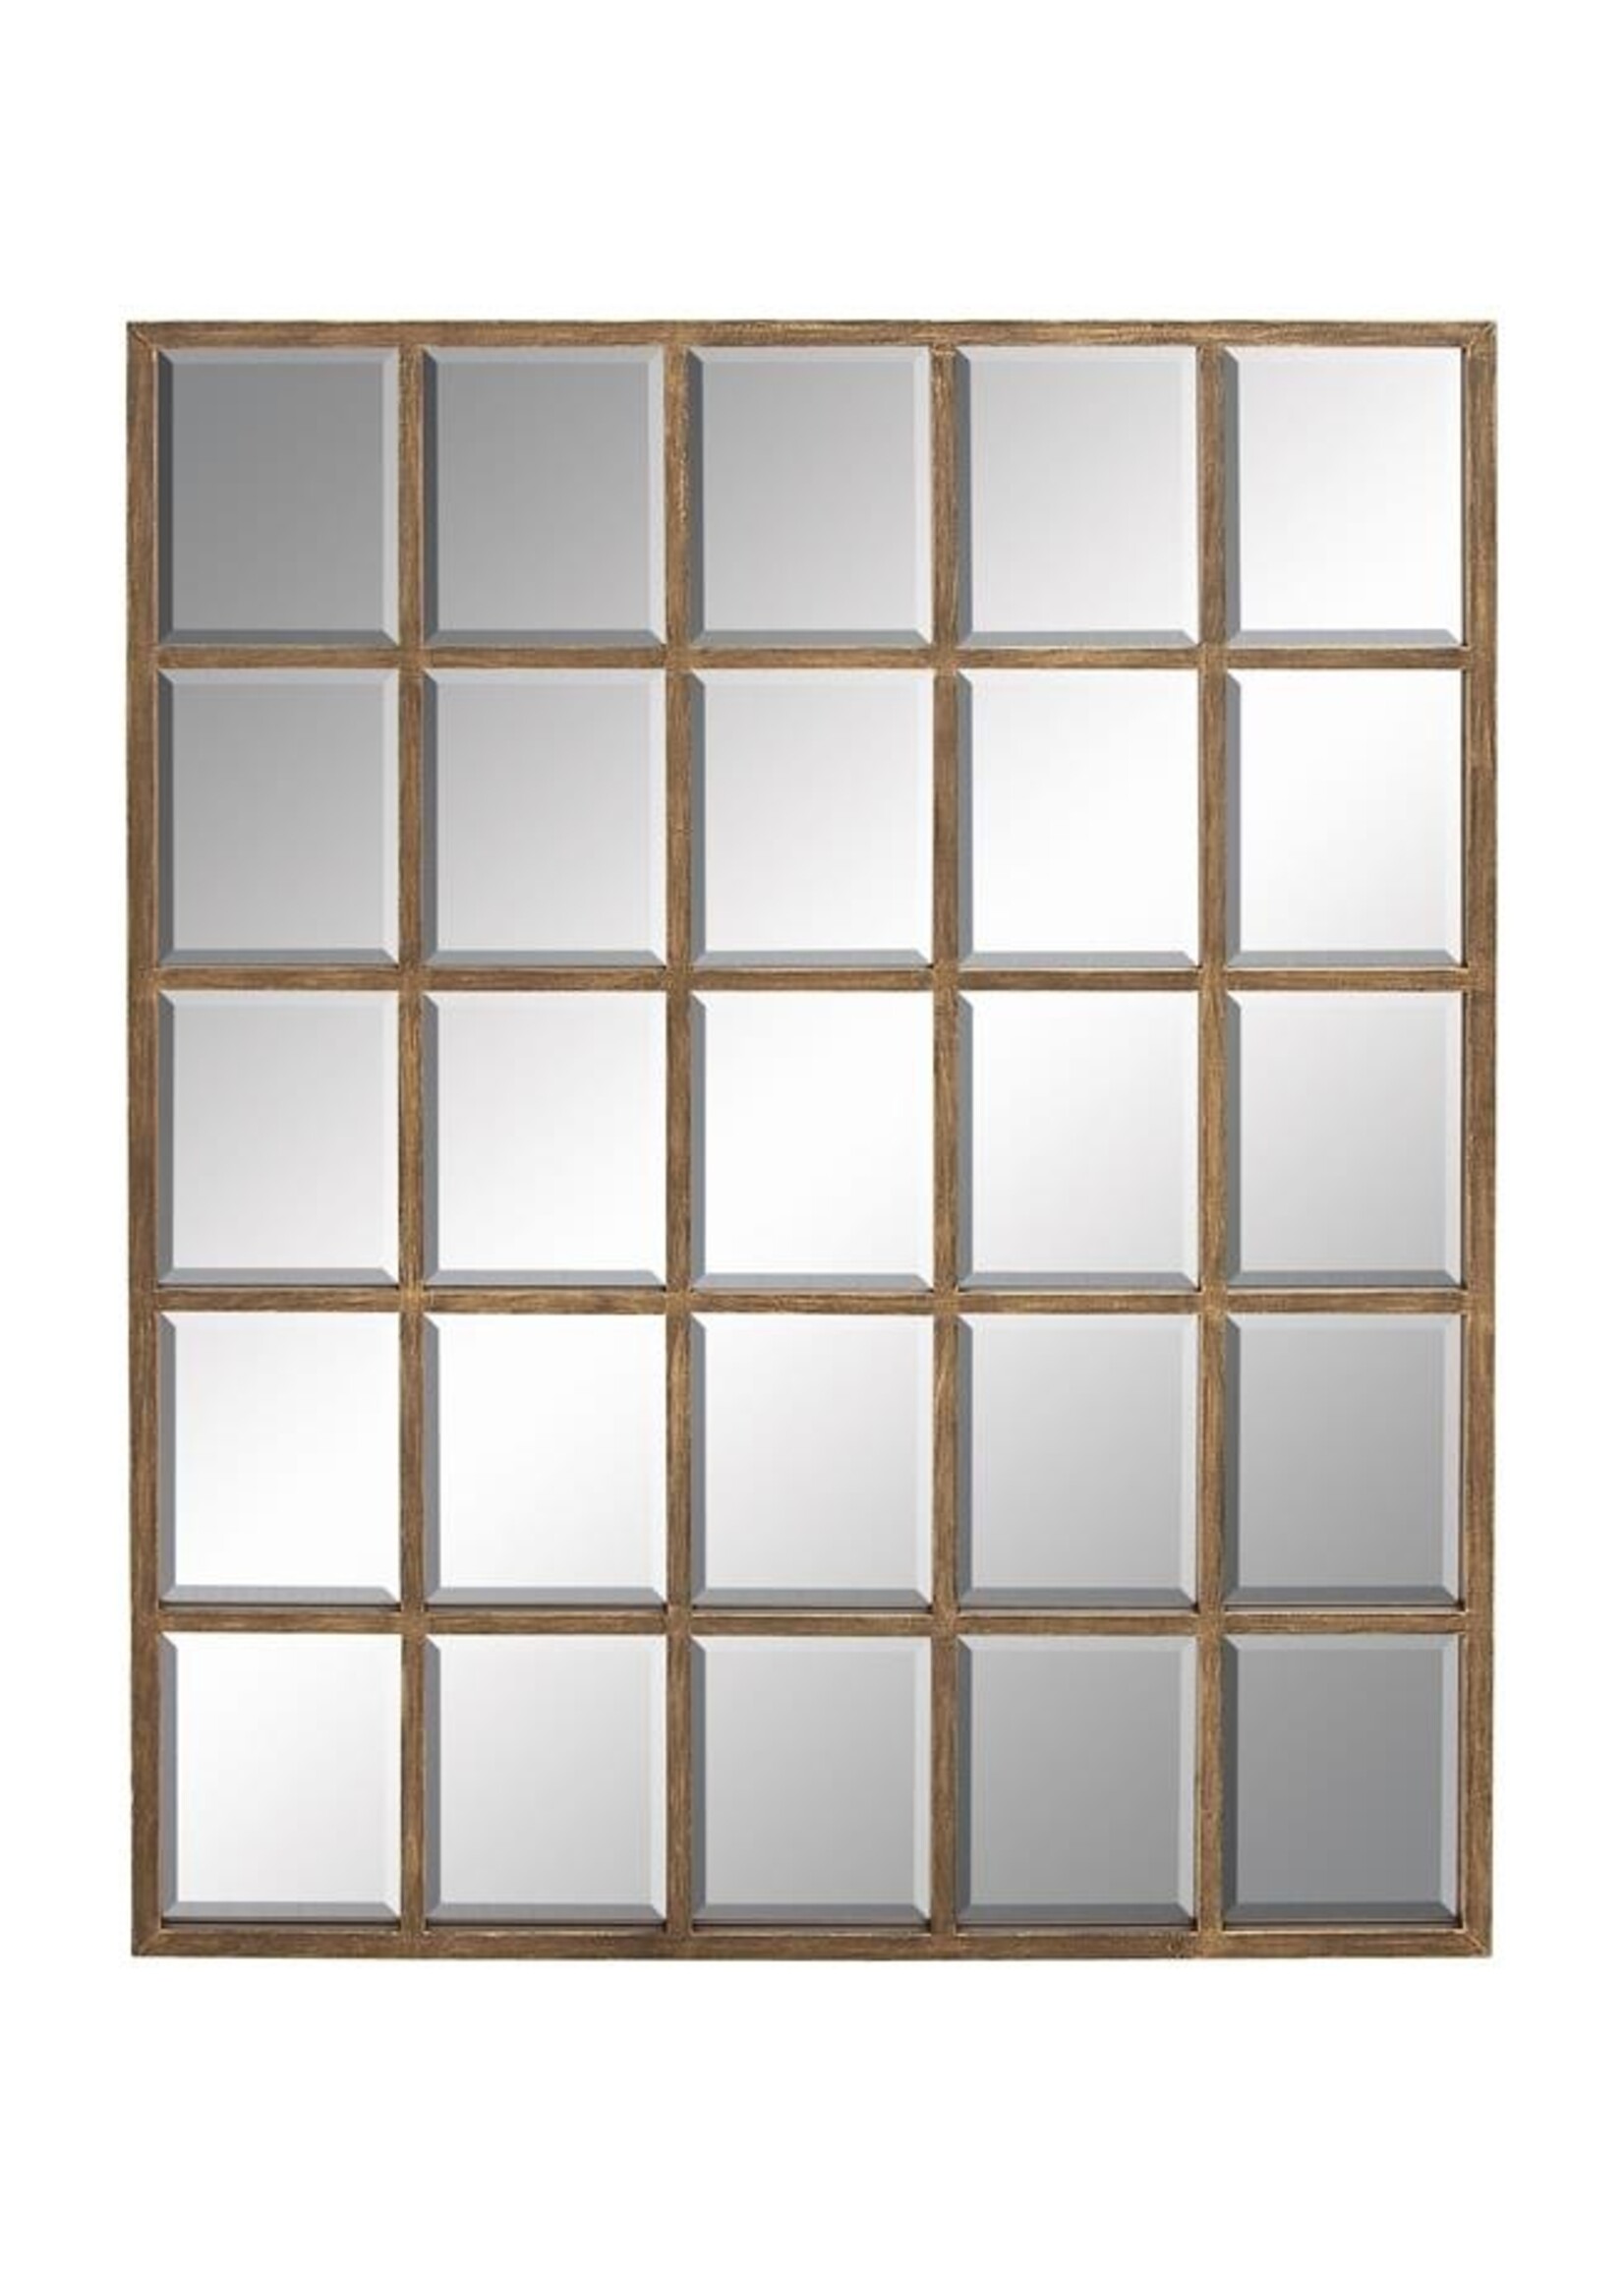 UMA Enterprises 53182 Brown Wood Window Pane Inspired Wall Mirror 56" x 44"